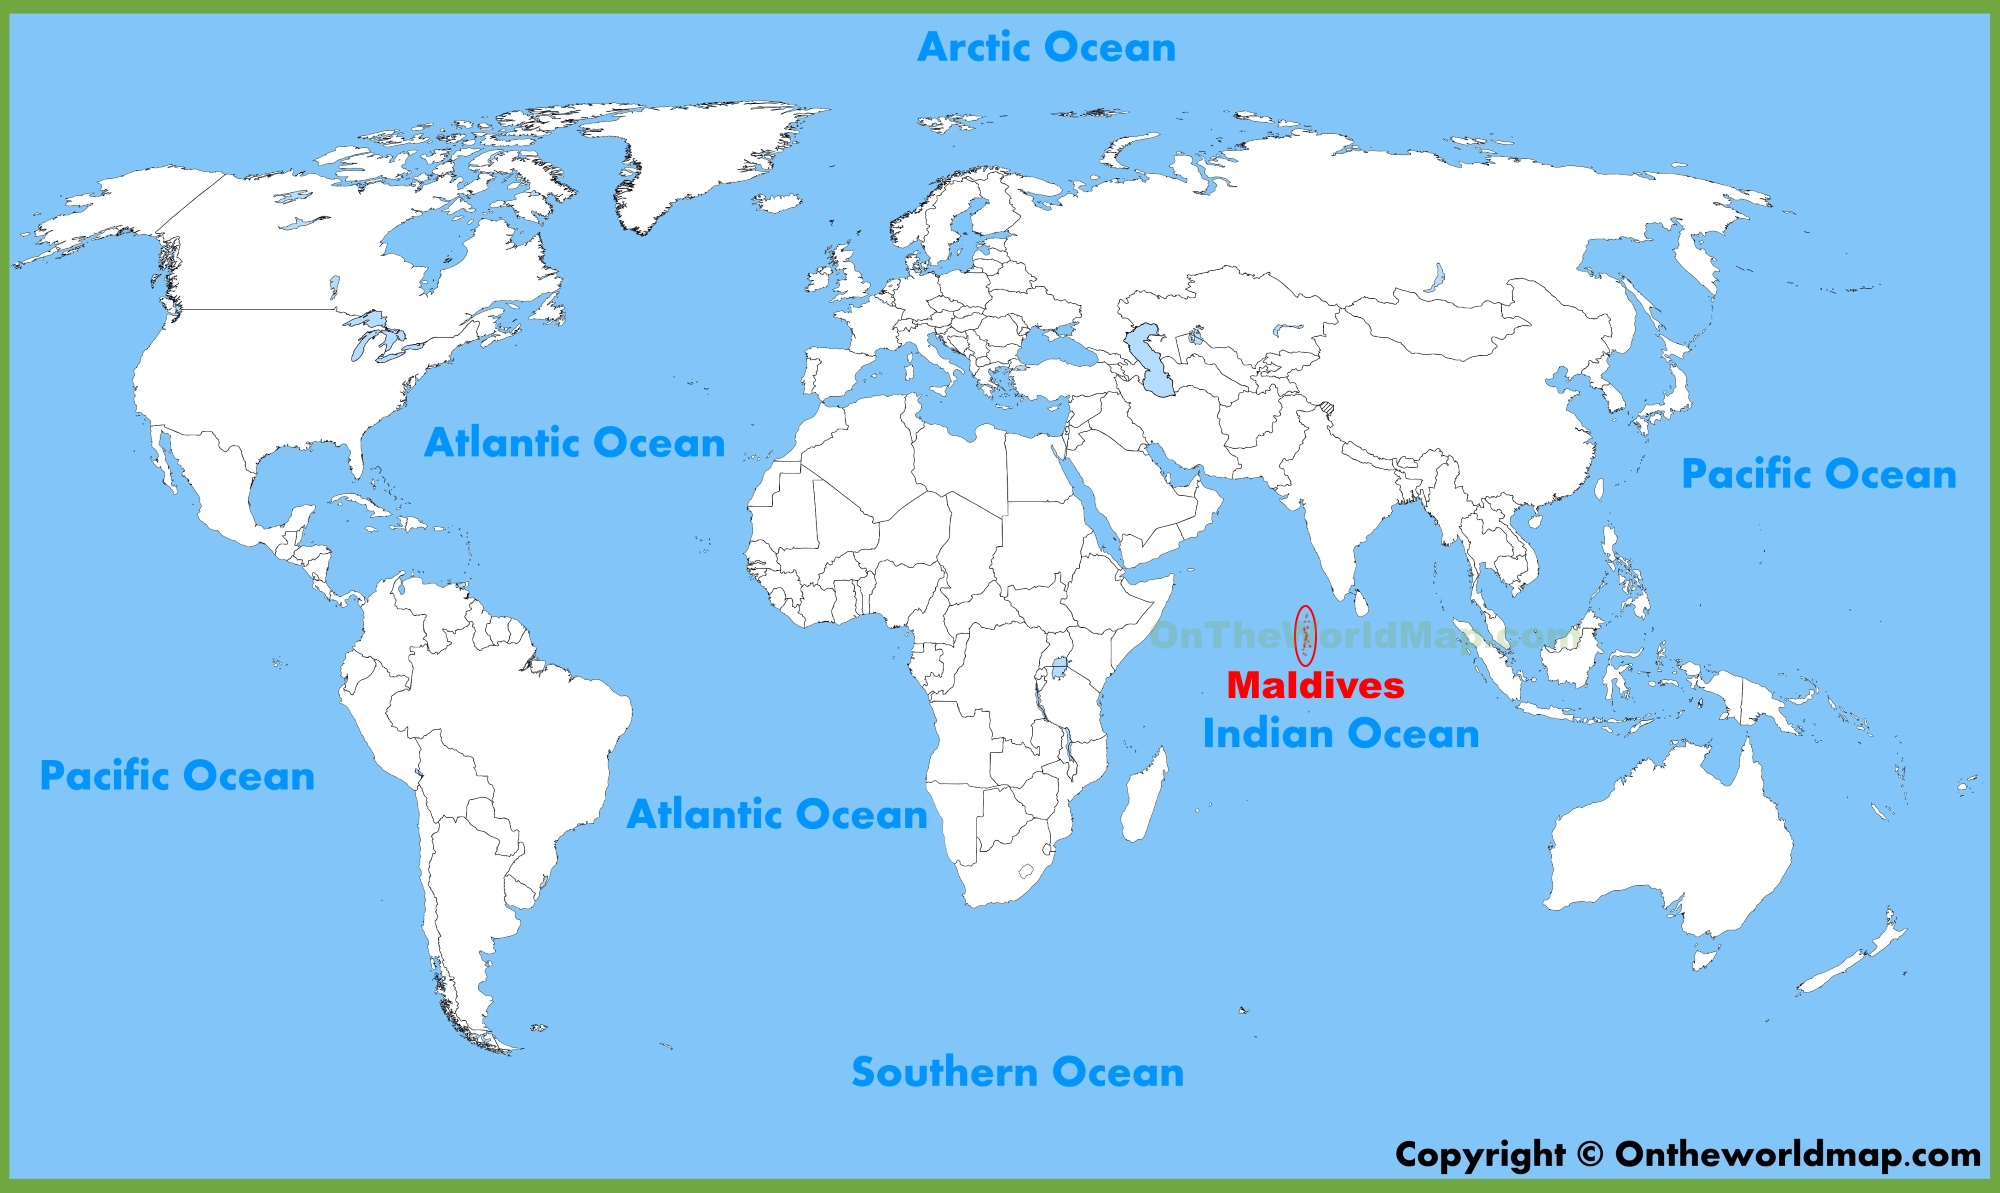 Maldives Islands World Map: Explore the Paradise Archipelago